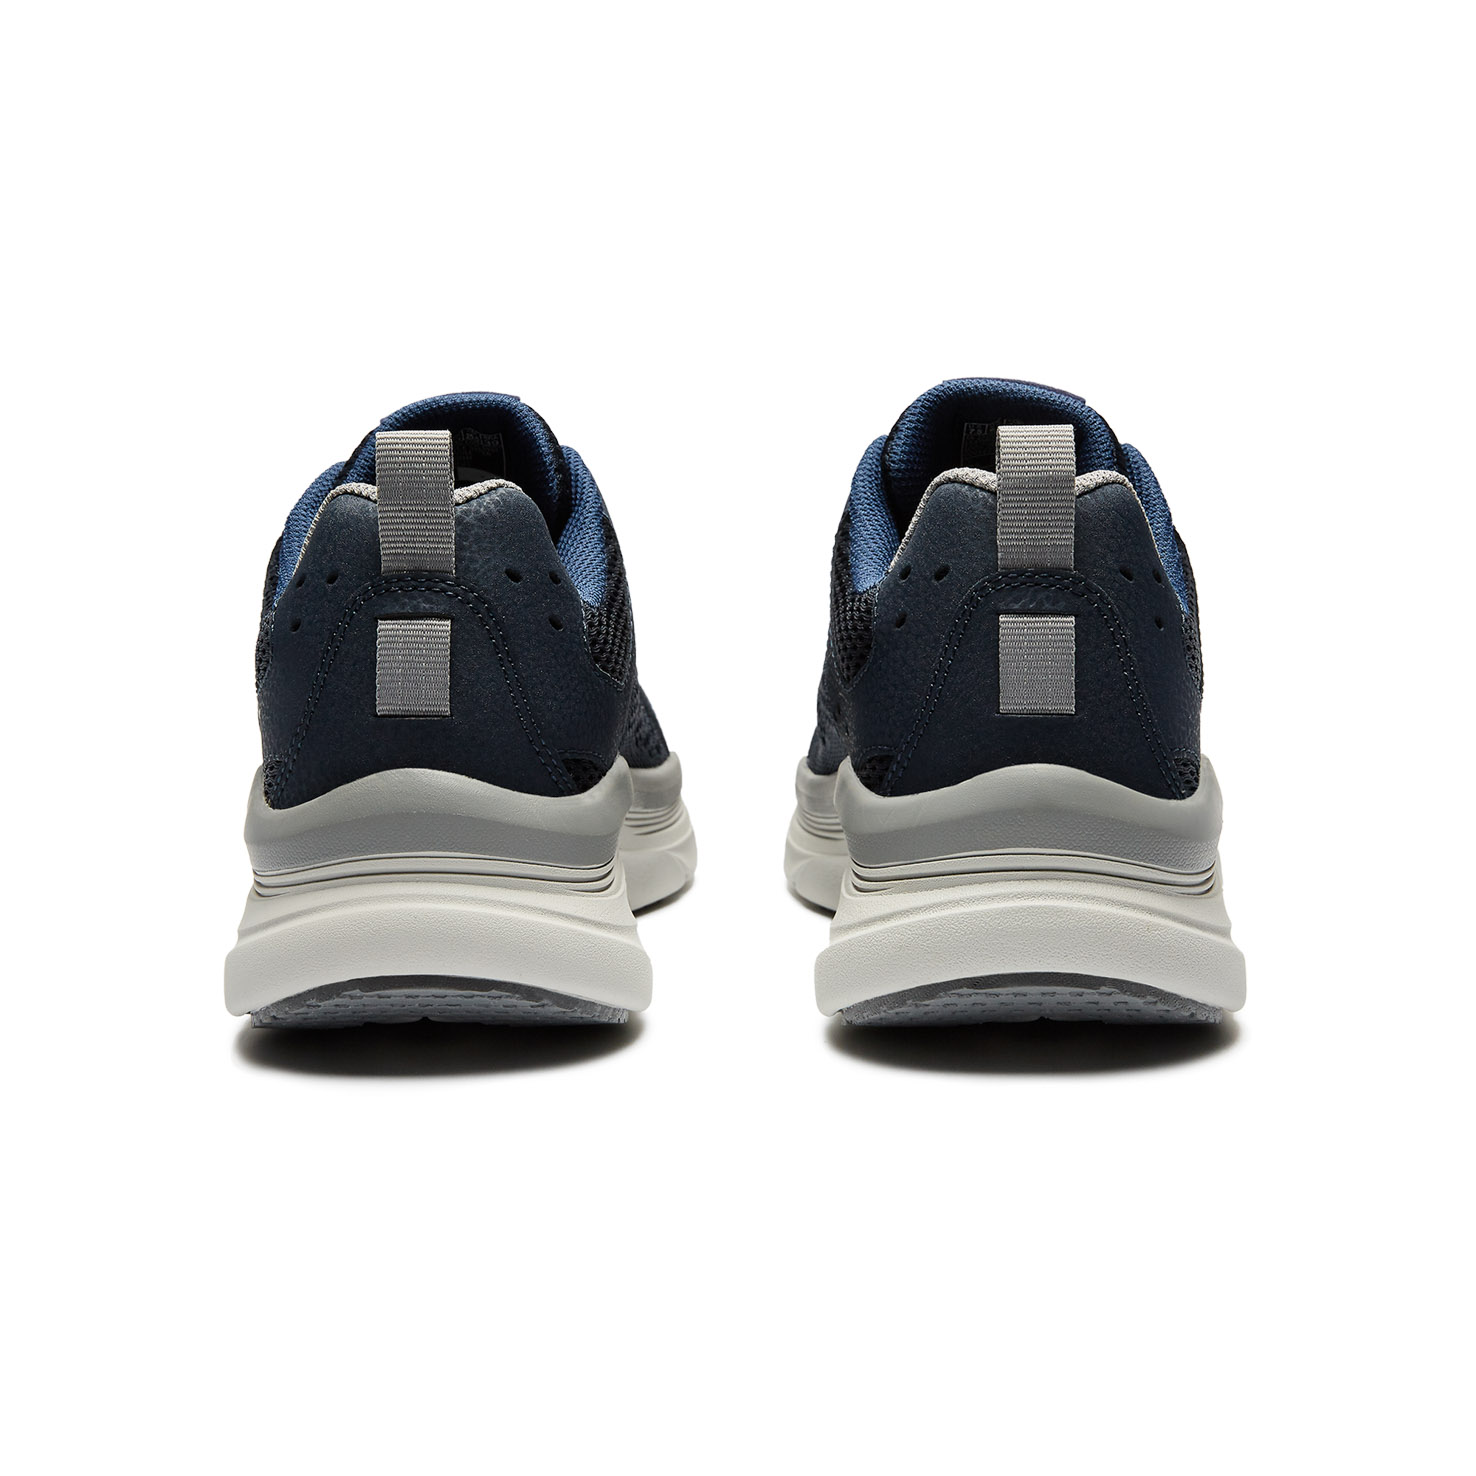 Men's low shoes SKECHERS, размер 40, цвет черный SK232044 - фото 4